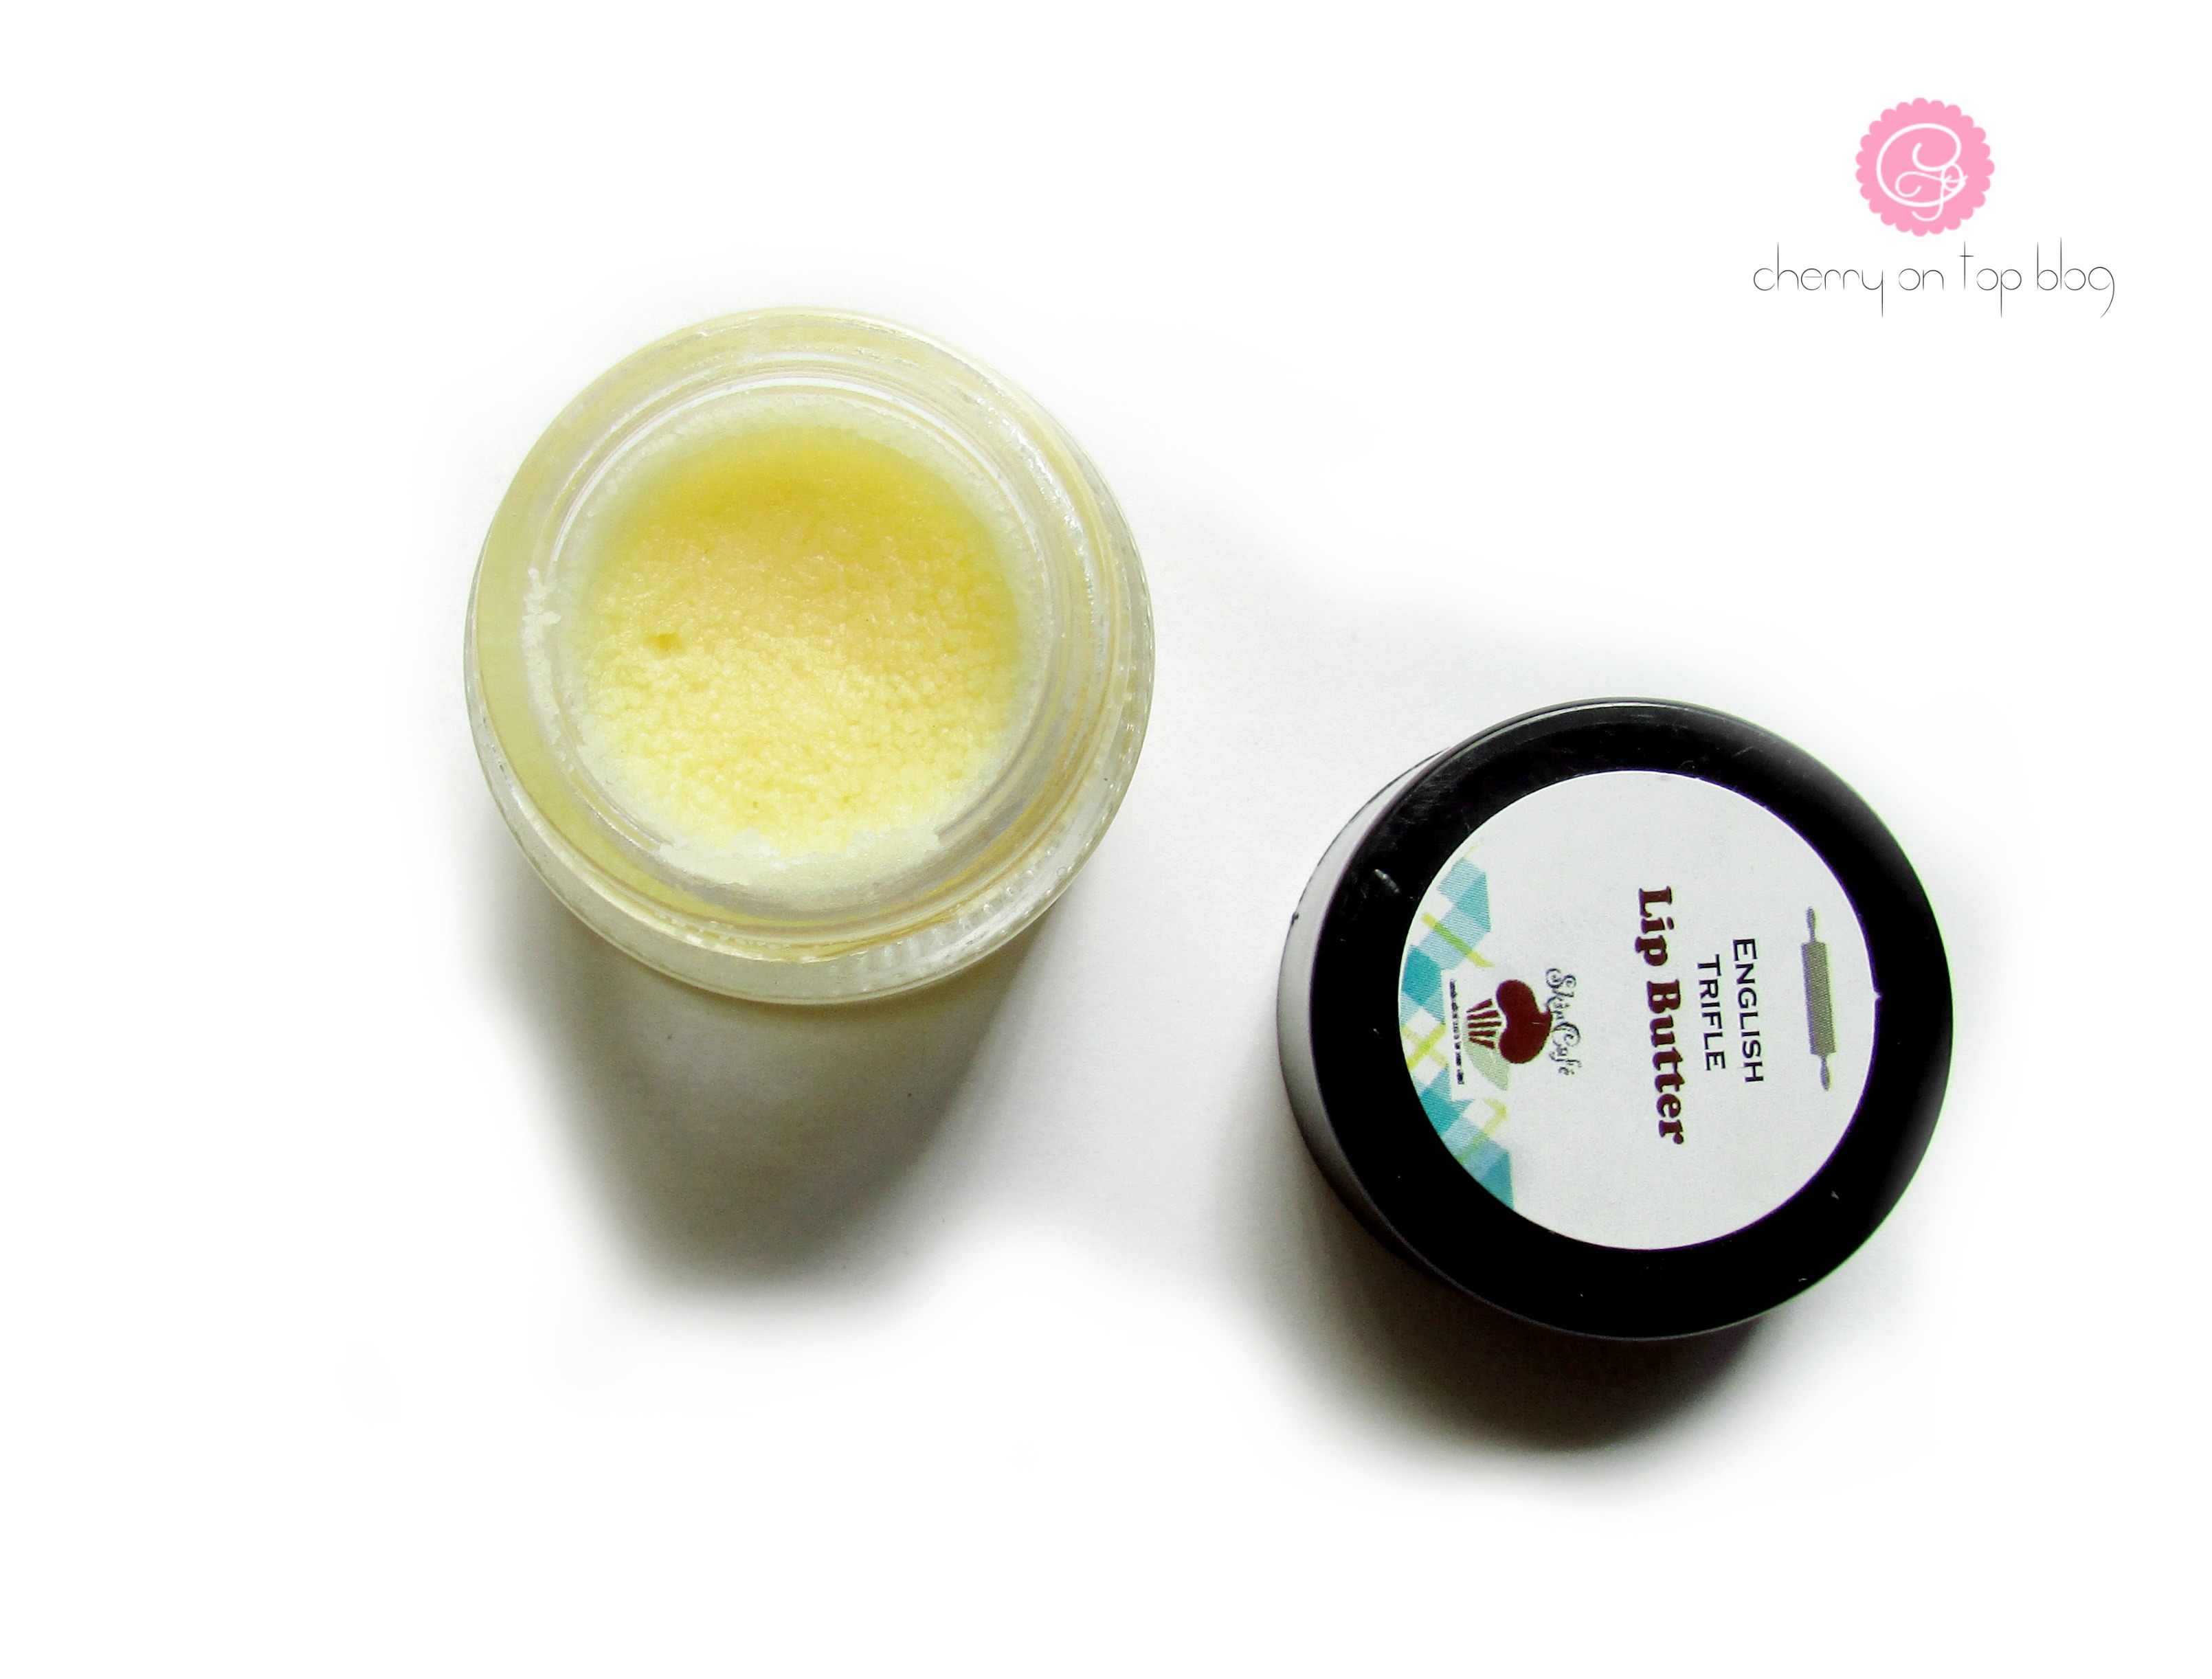 SkinCafe Lip Care Range- Scrub, Butter & Tinted Balm Review| cherryontopblog.com